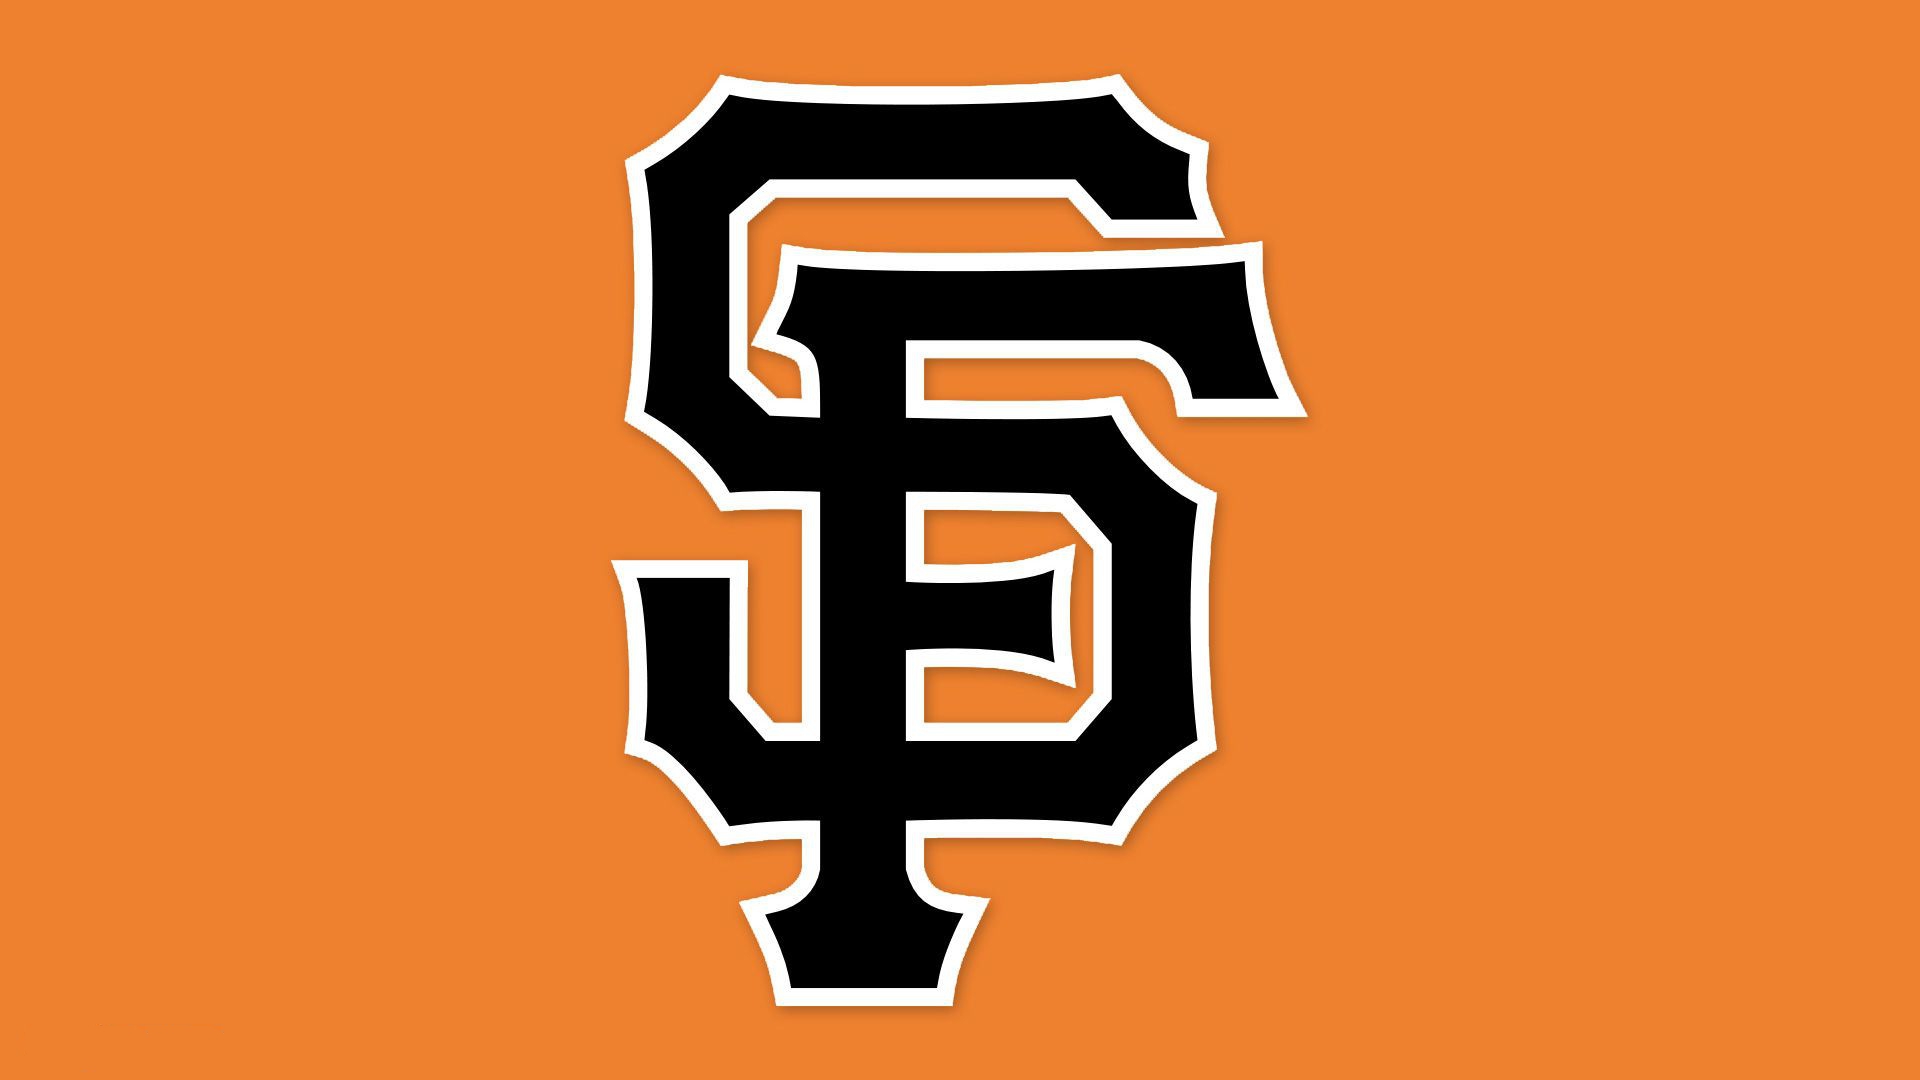 San Francisco Giants Logo Backgrounds Hd Pixelstalk Net